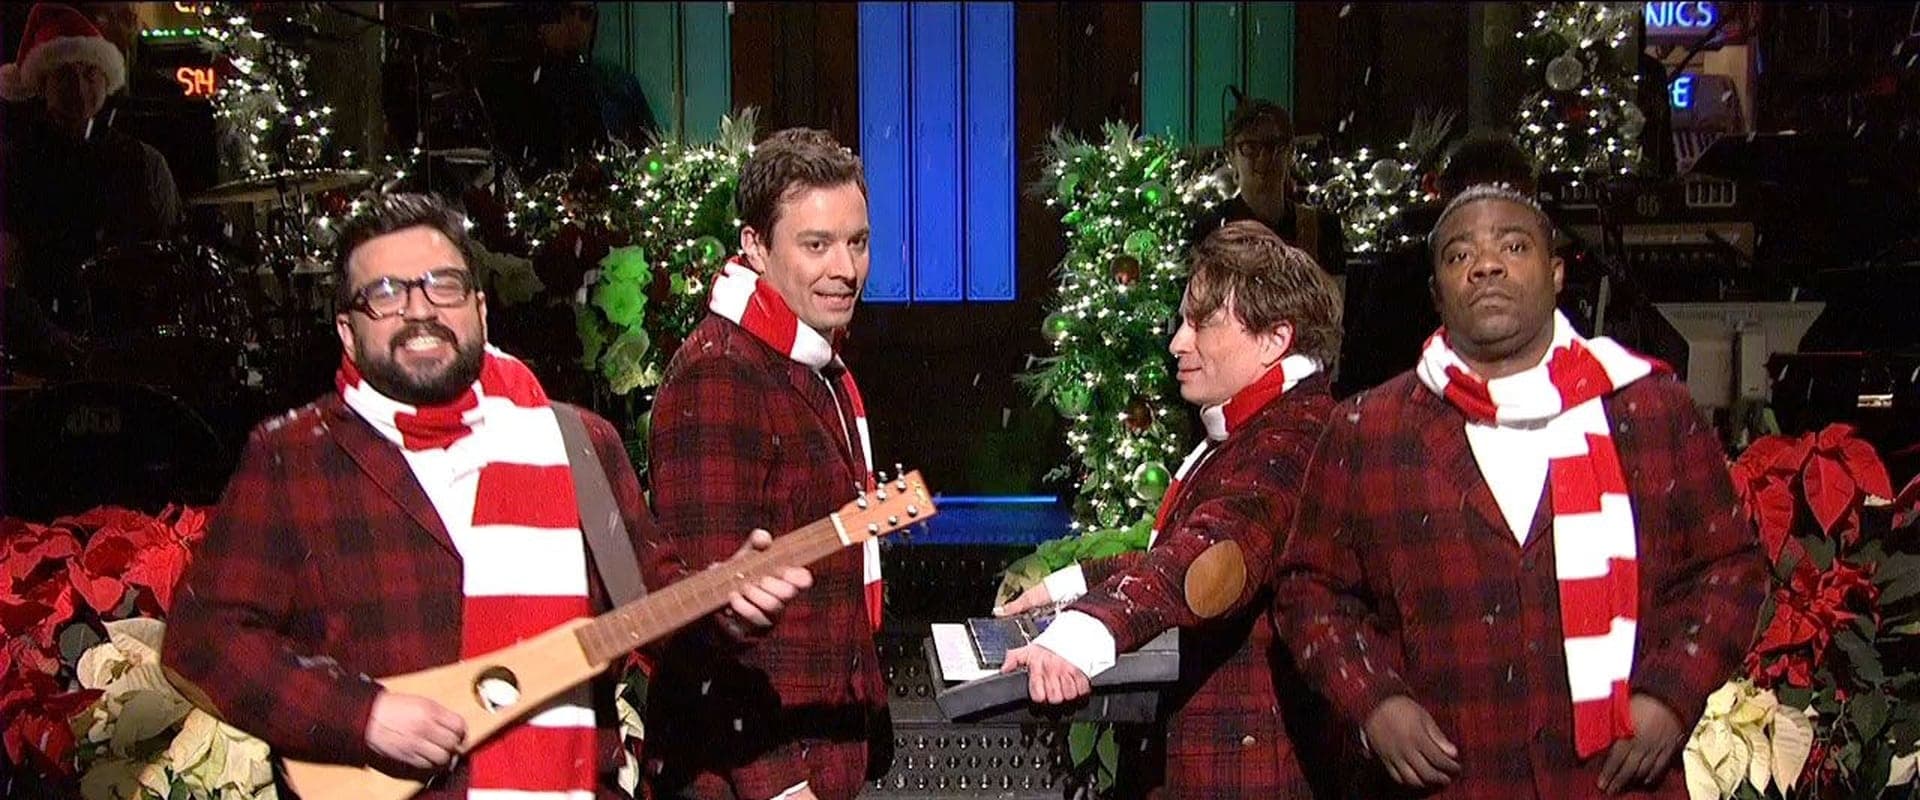 Saturday Night Live: Christmas